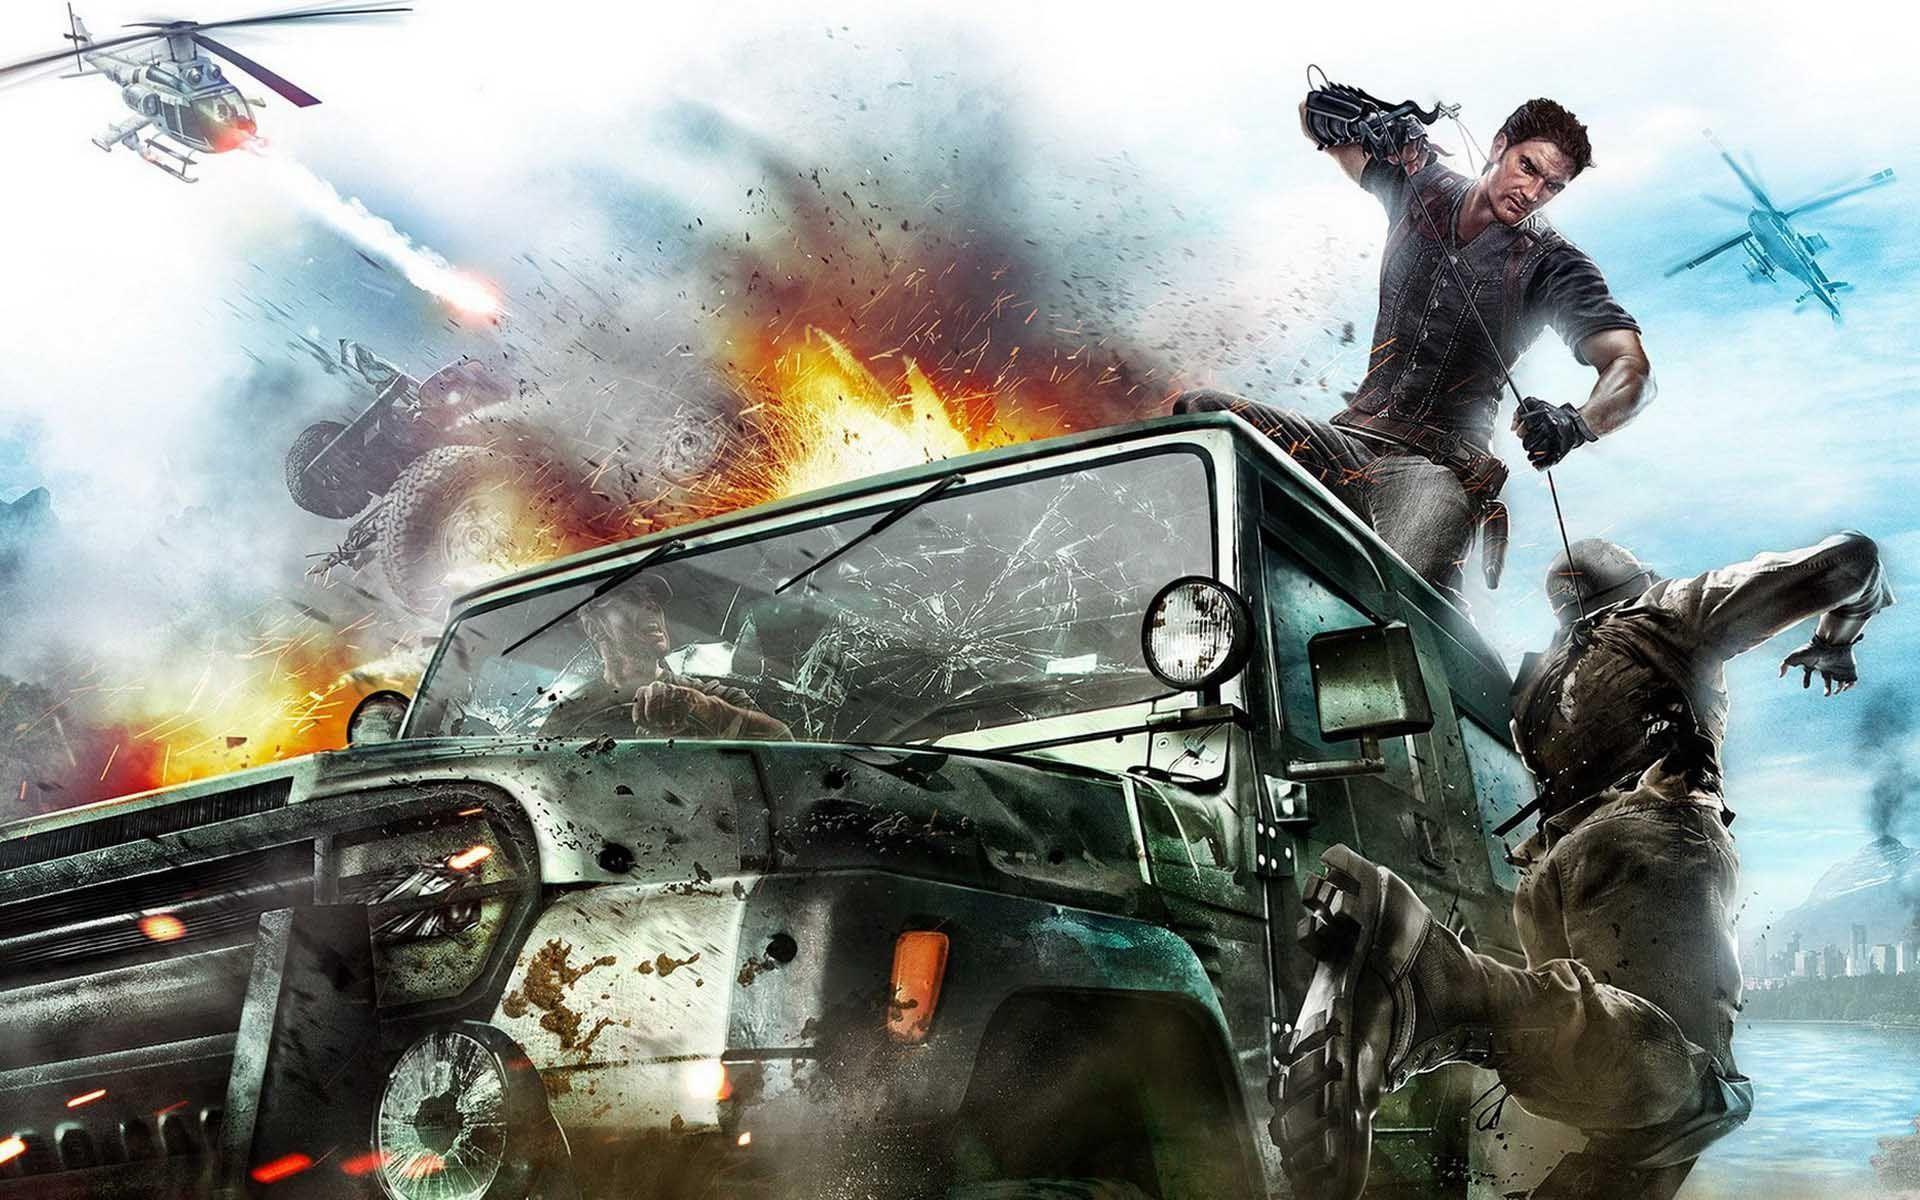 Battlefield 4 Action Scene. HD Games Wallpaper for Mobile